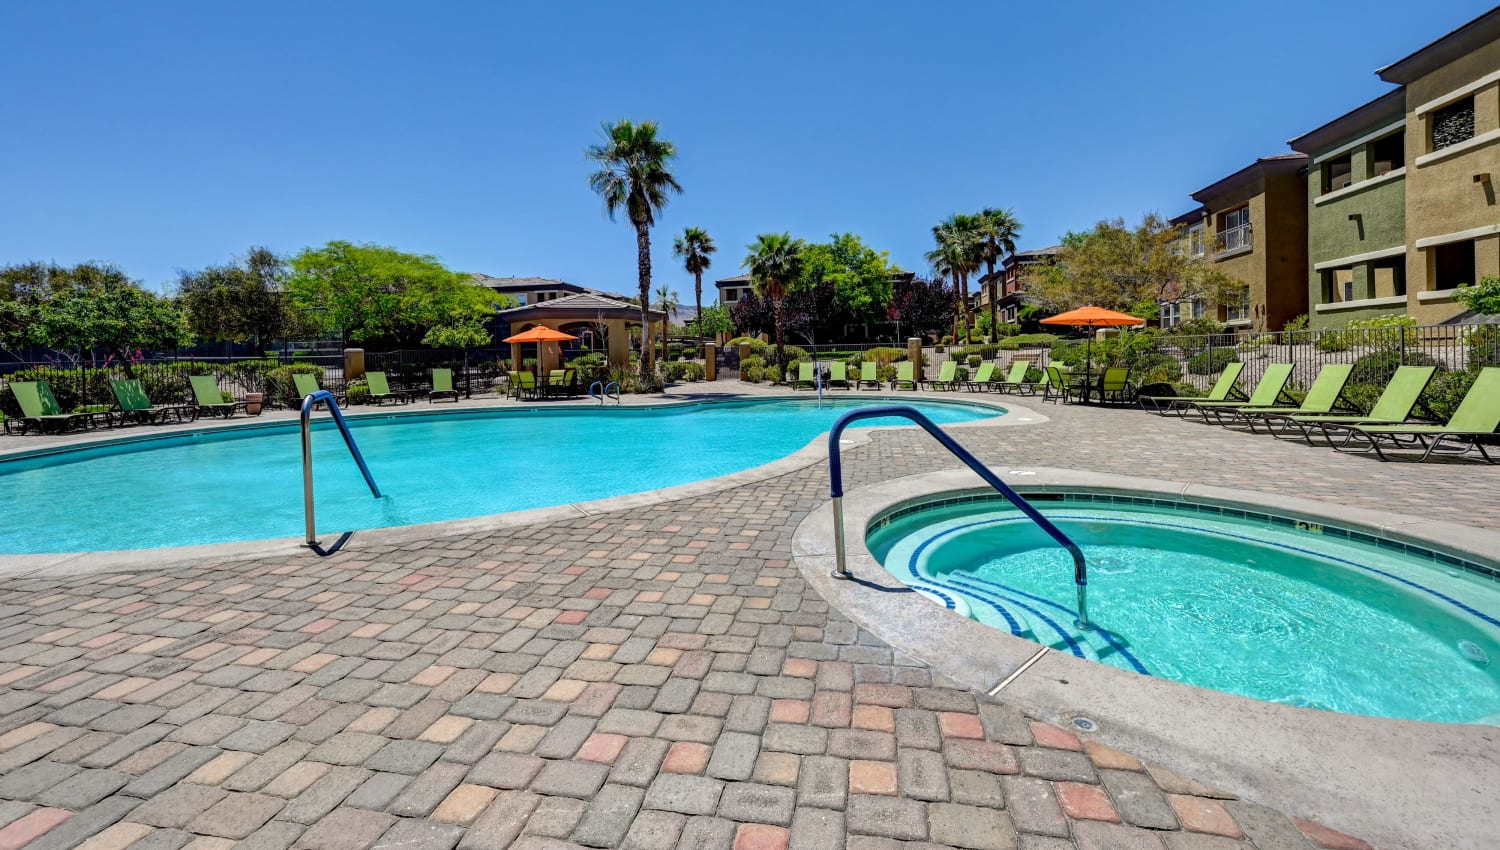 Swimming pool and spa at Morningstar Apartments in Las Vegas, Nevada